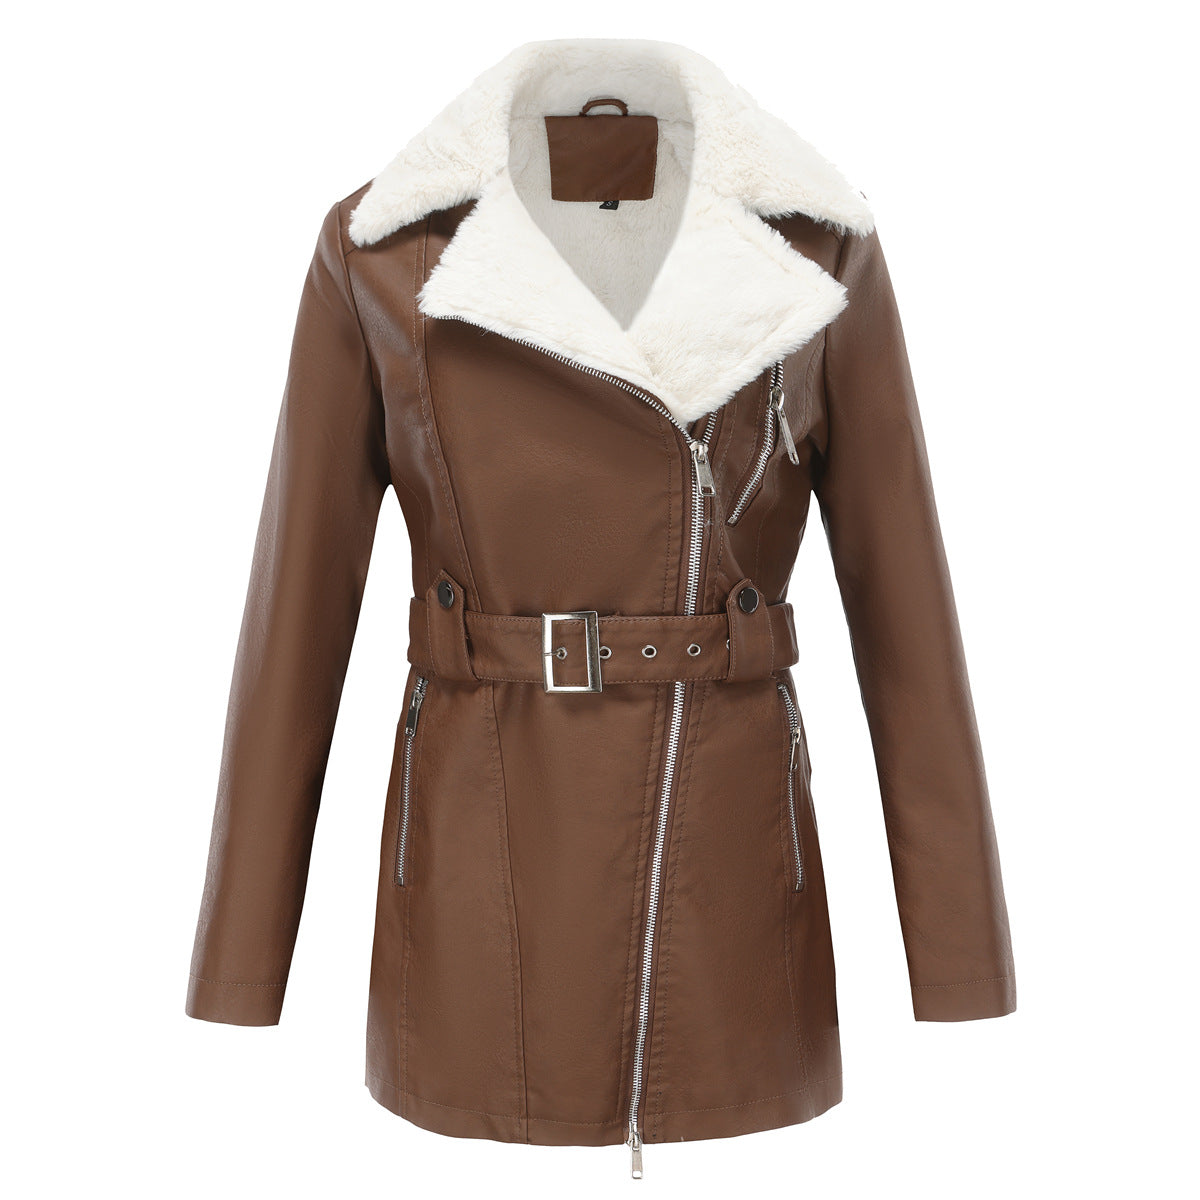 Autumn Winter Long Sleeved Fleece Leather Jacket Women Collared Double Headed Zipper With Belt Warm Coat